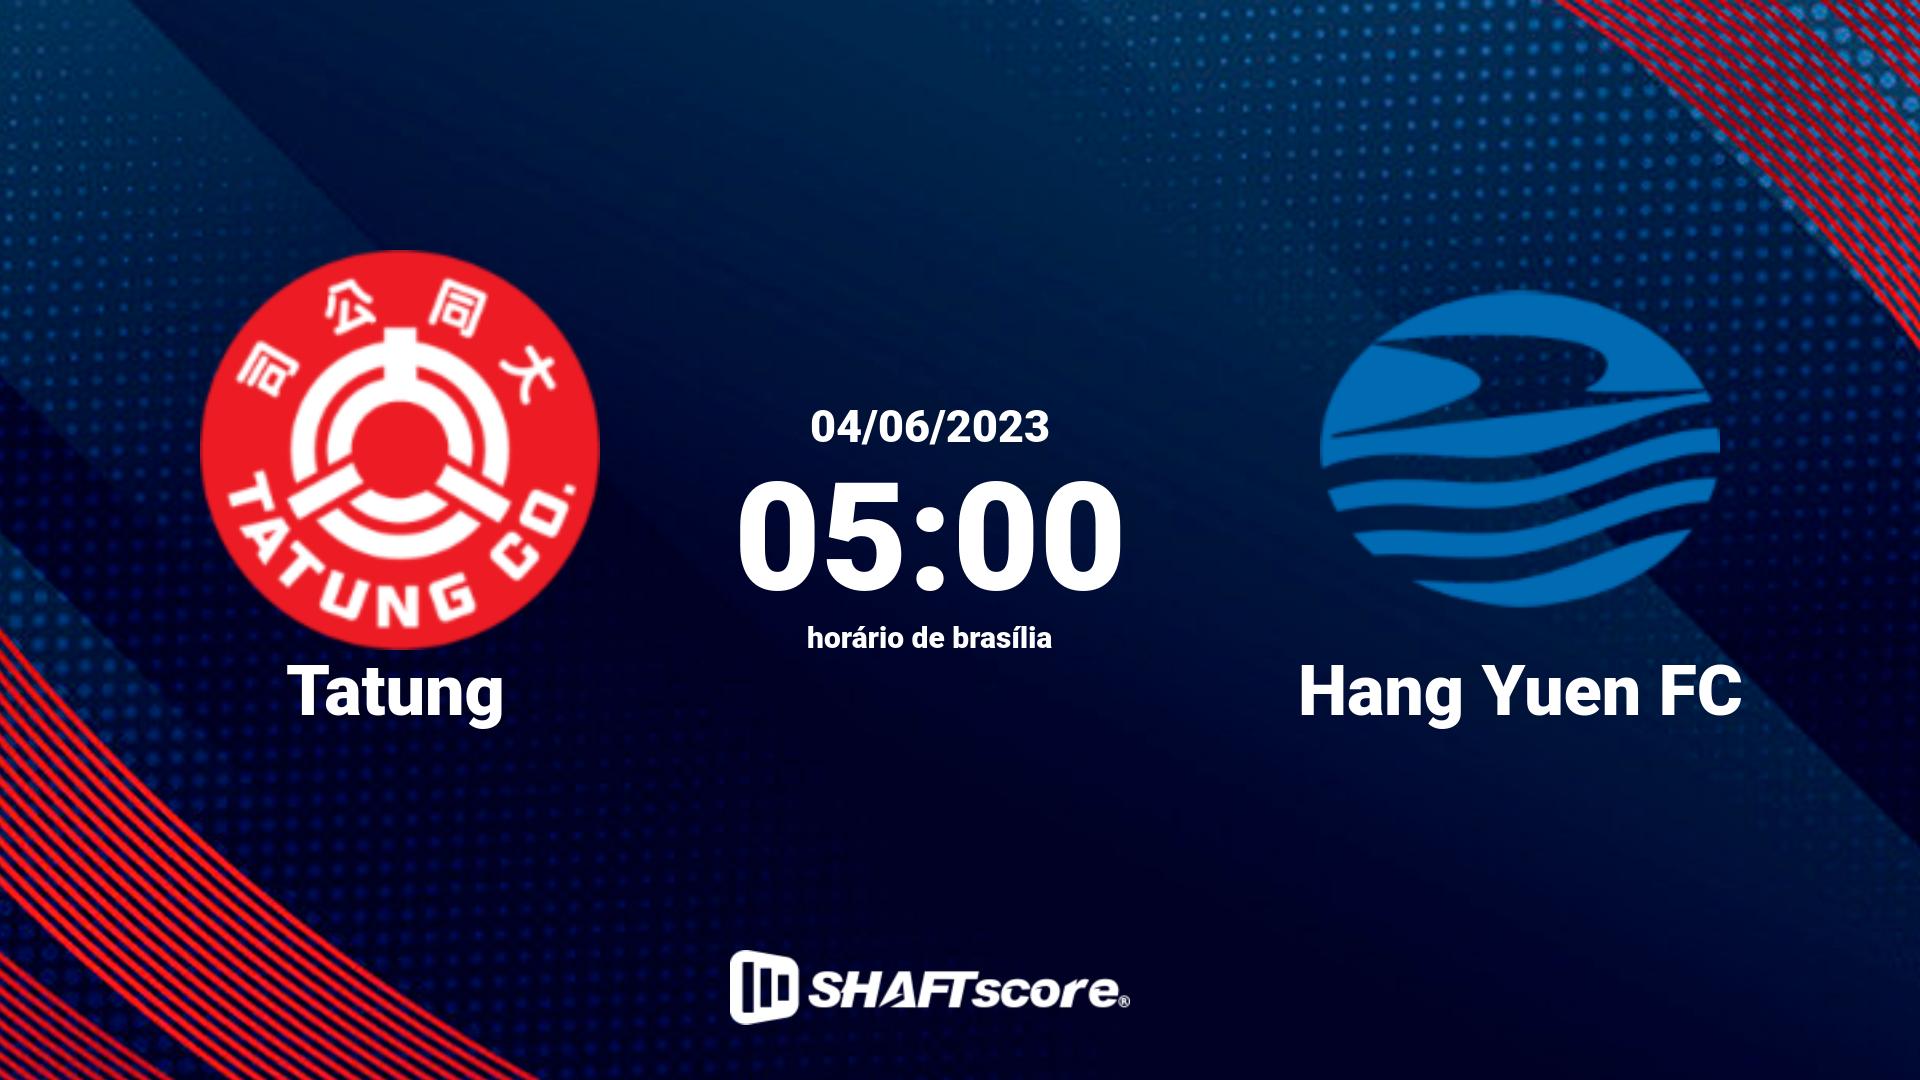 Estatísticas do jogo Tatung vs Hang Yuen FC 04.06 05:00